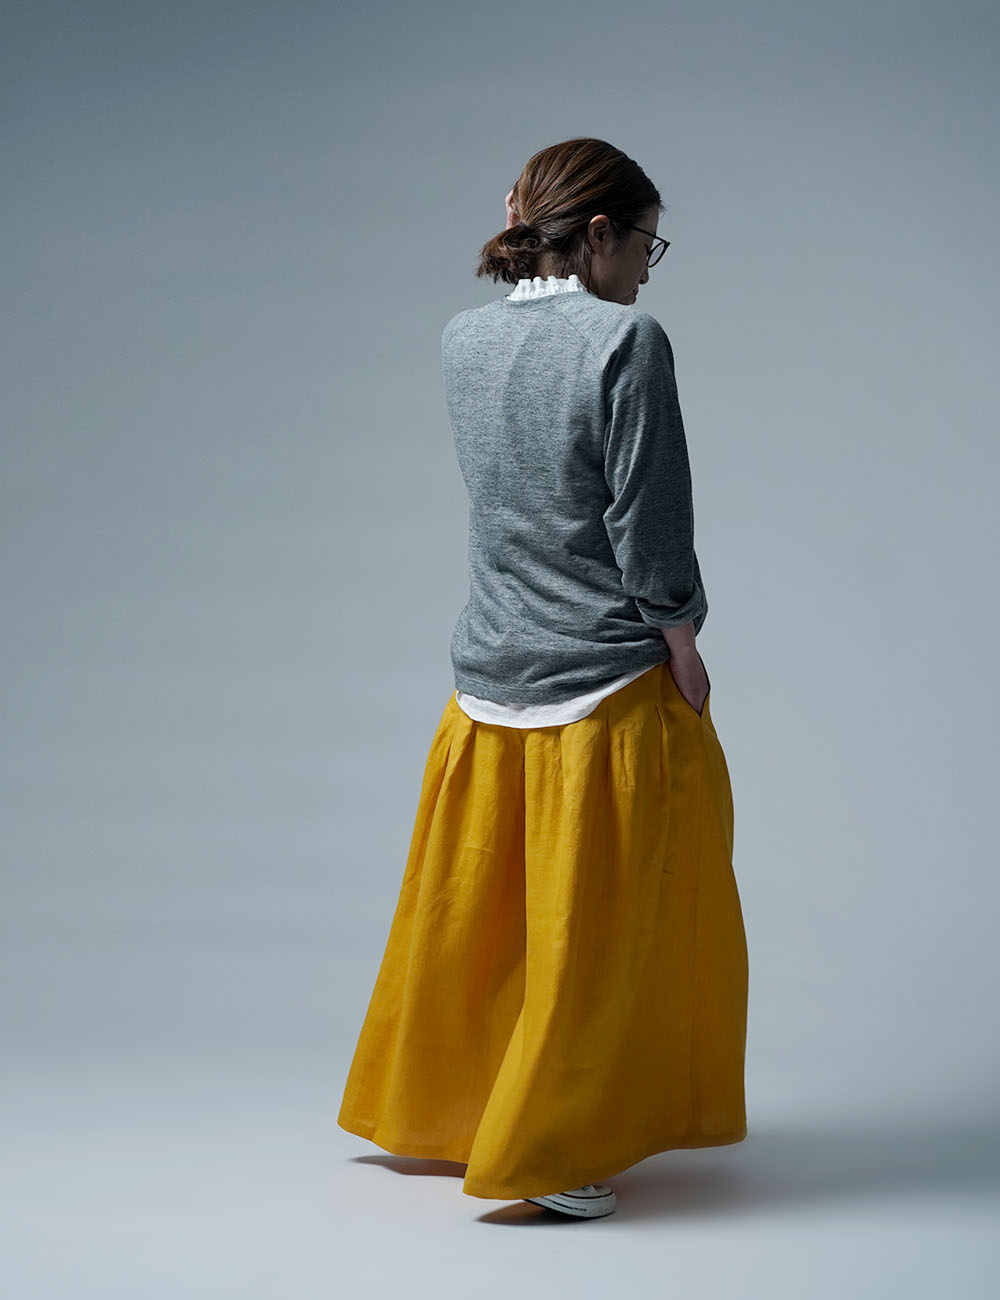 【wafu】Linen Pants 袴(はかま)パンツ / 山吹色(やまぶきいろ) b002k-ybk1